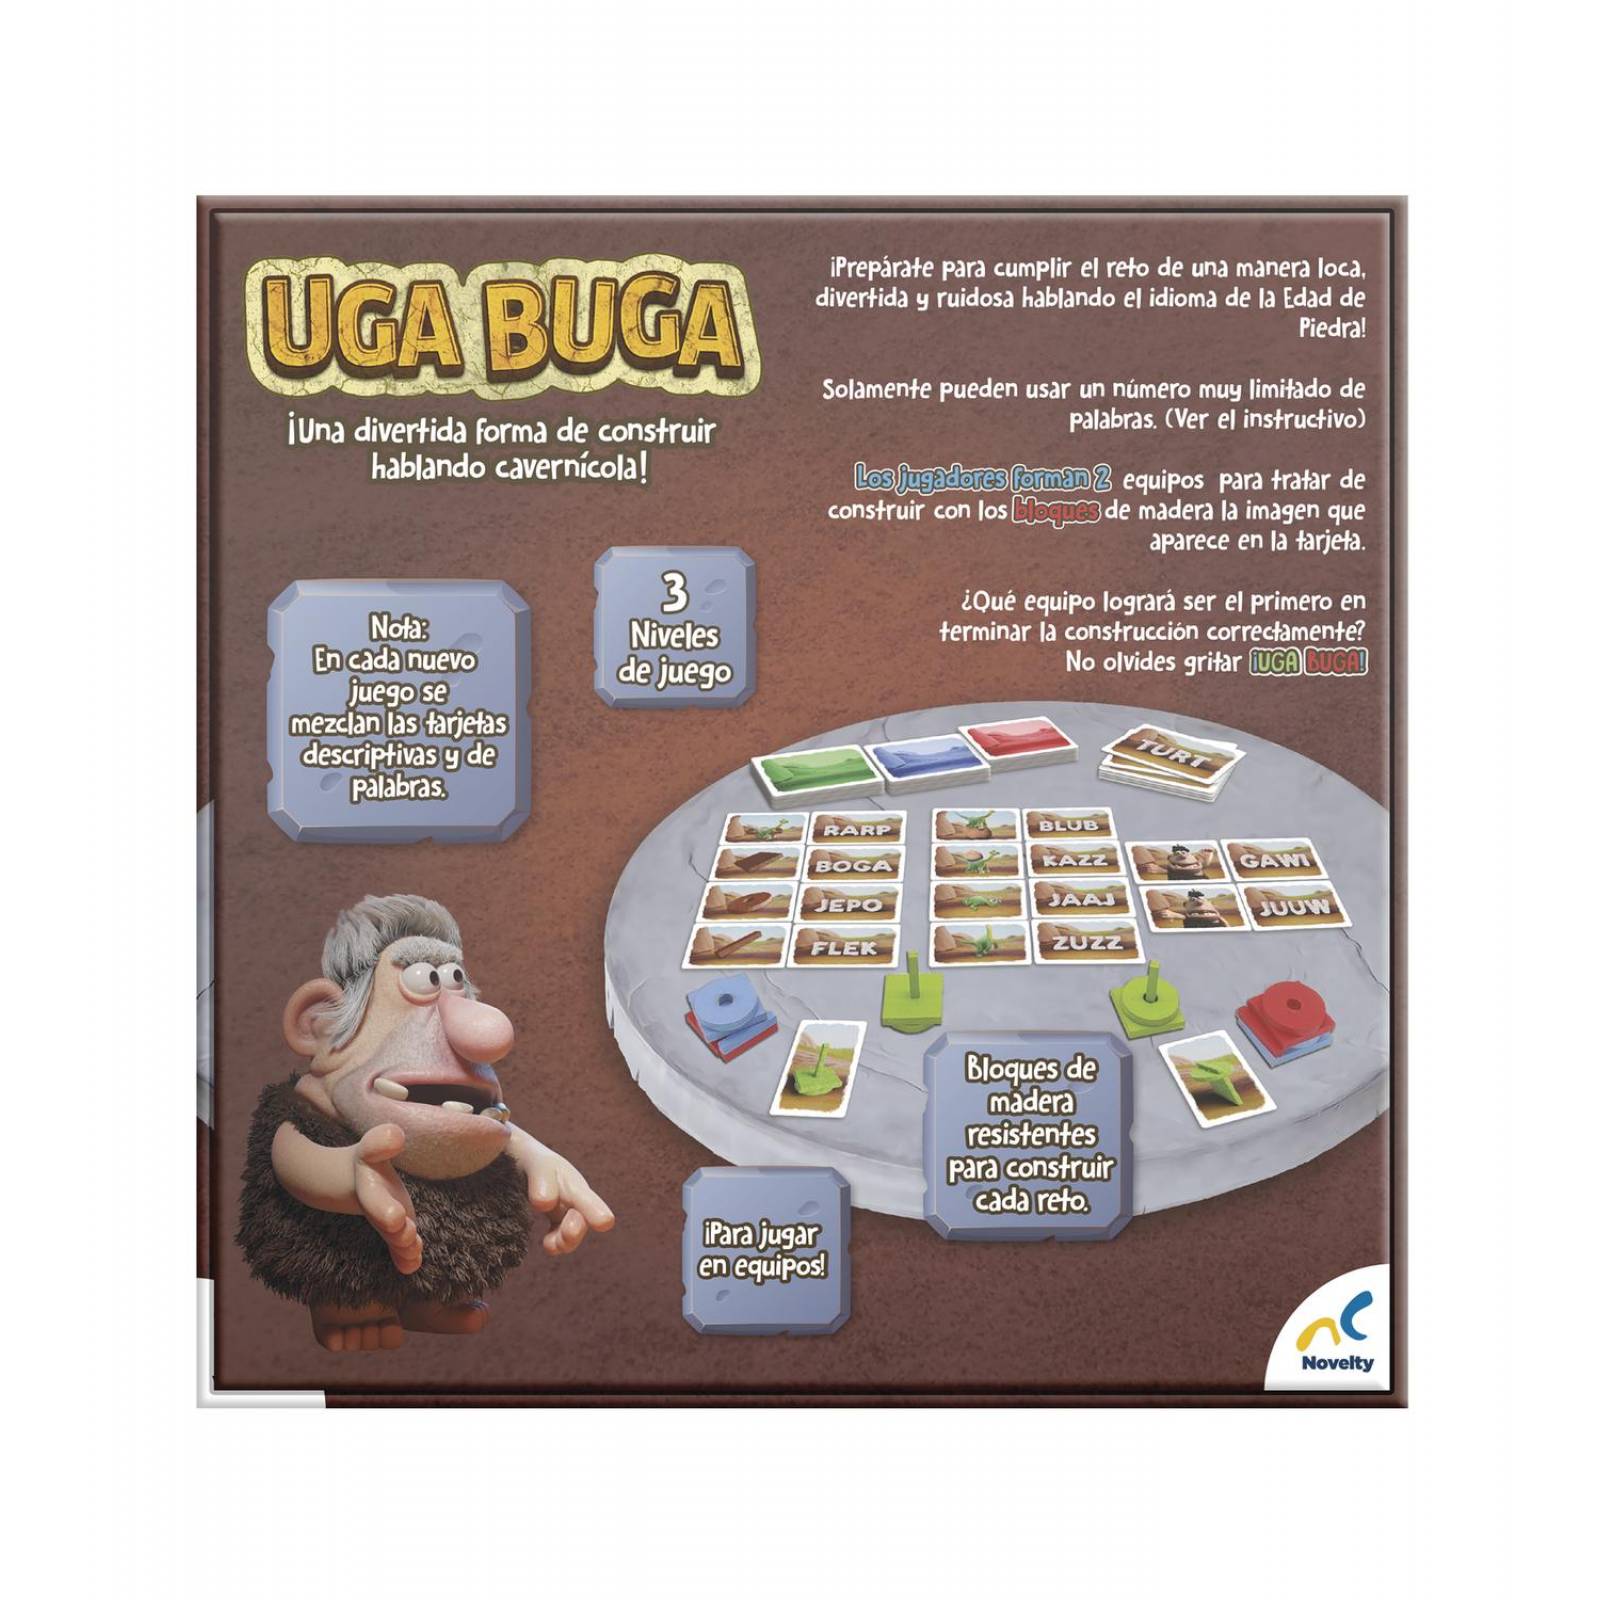 Cómo jugar Uga Buga? 